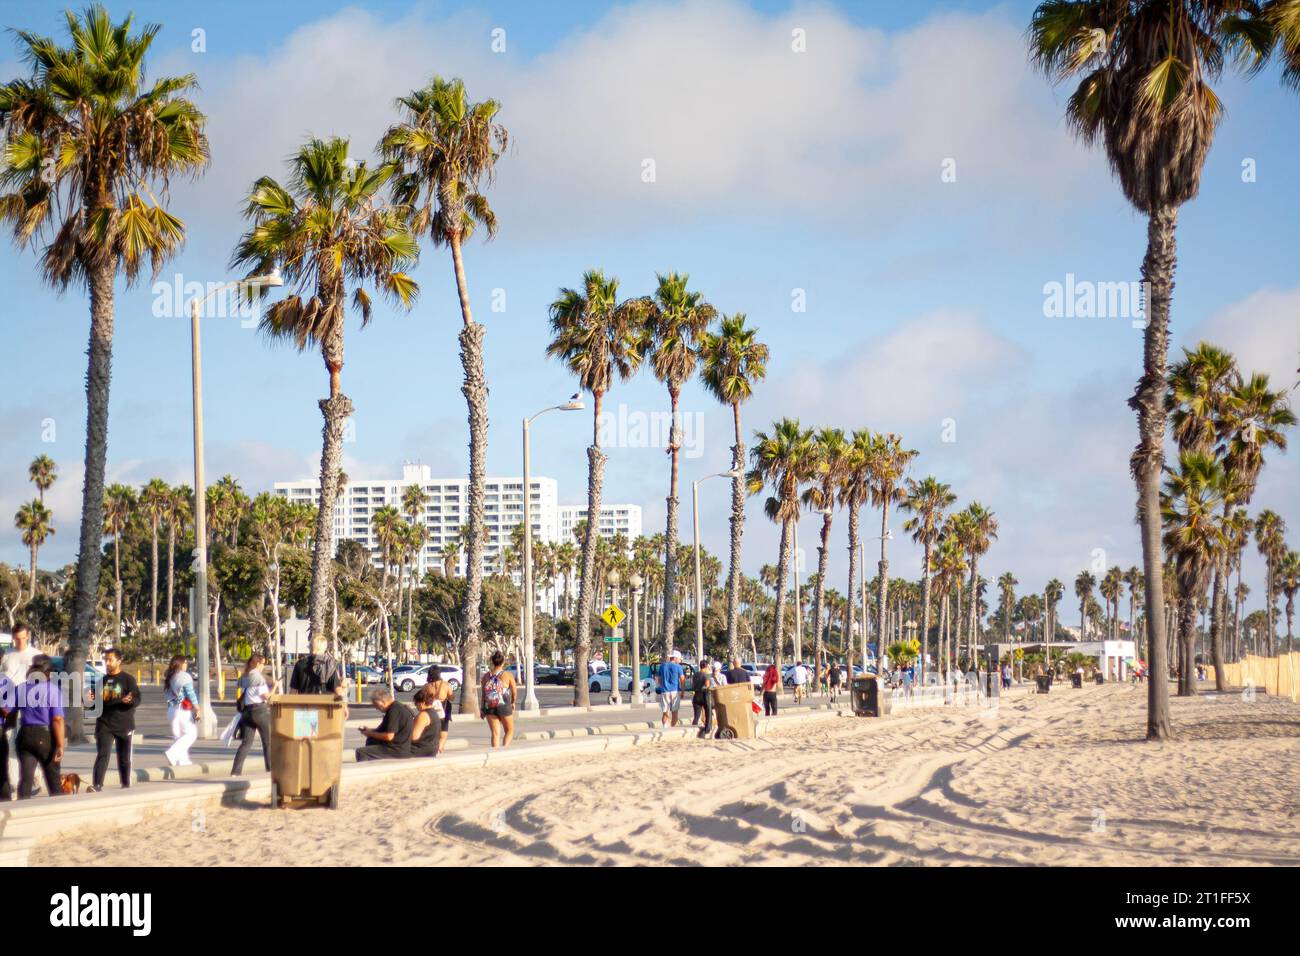 Walking under the palm trees at Santa Monica Beach, California Stock Photo